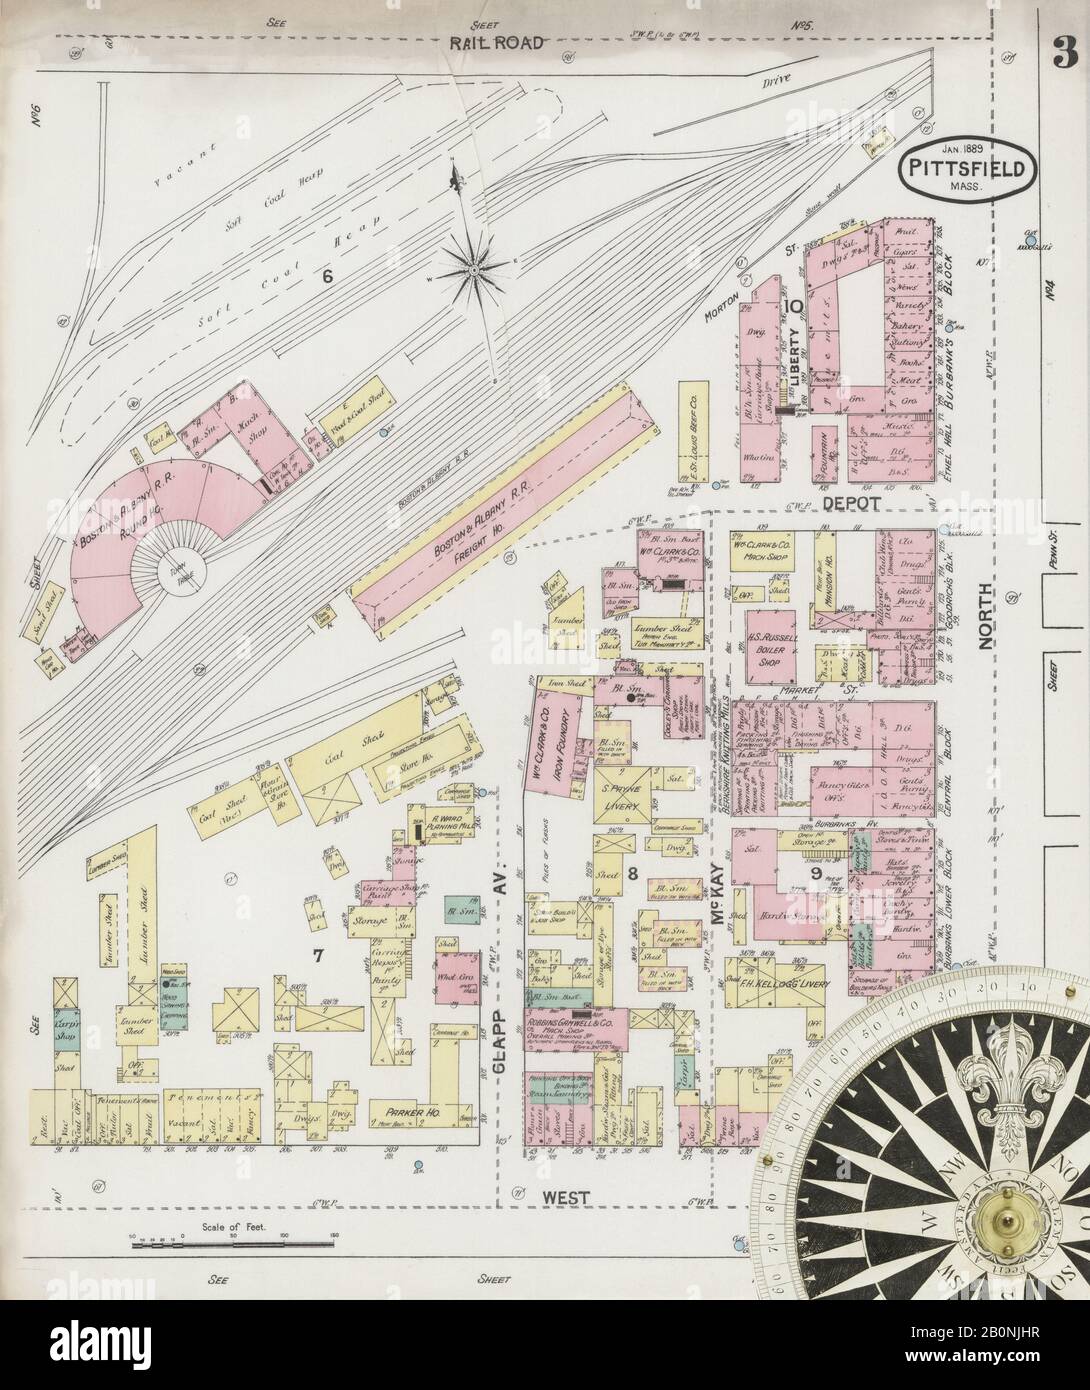 Bild 3 von Sanborn Fire Insurance Map aus Pittsfield, Berkshire County, Massachusetts. Feb. 18 Blatt(e), Amerika, Straßenkarte mit einem Kompass Aus Dem 19. Jahrhundert Stockfoto